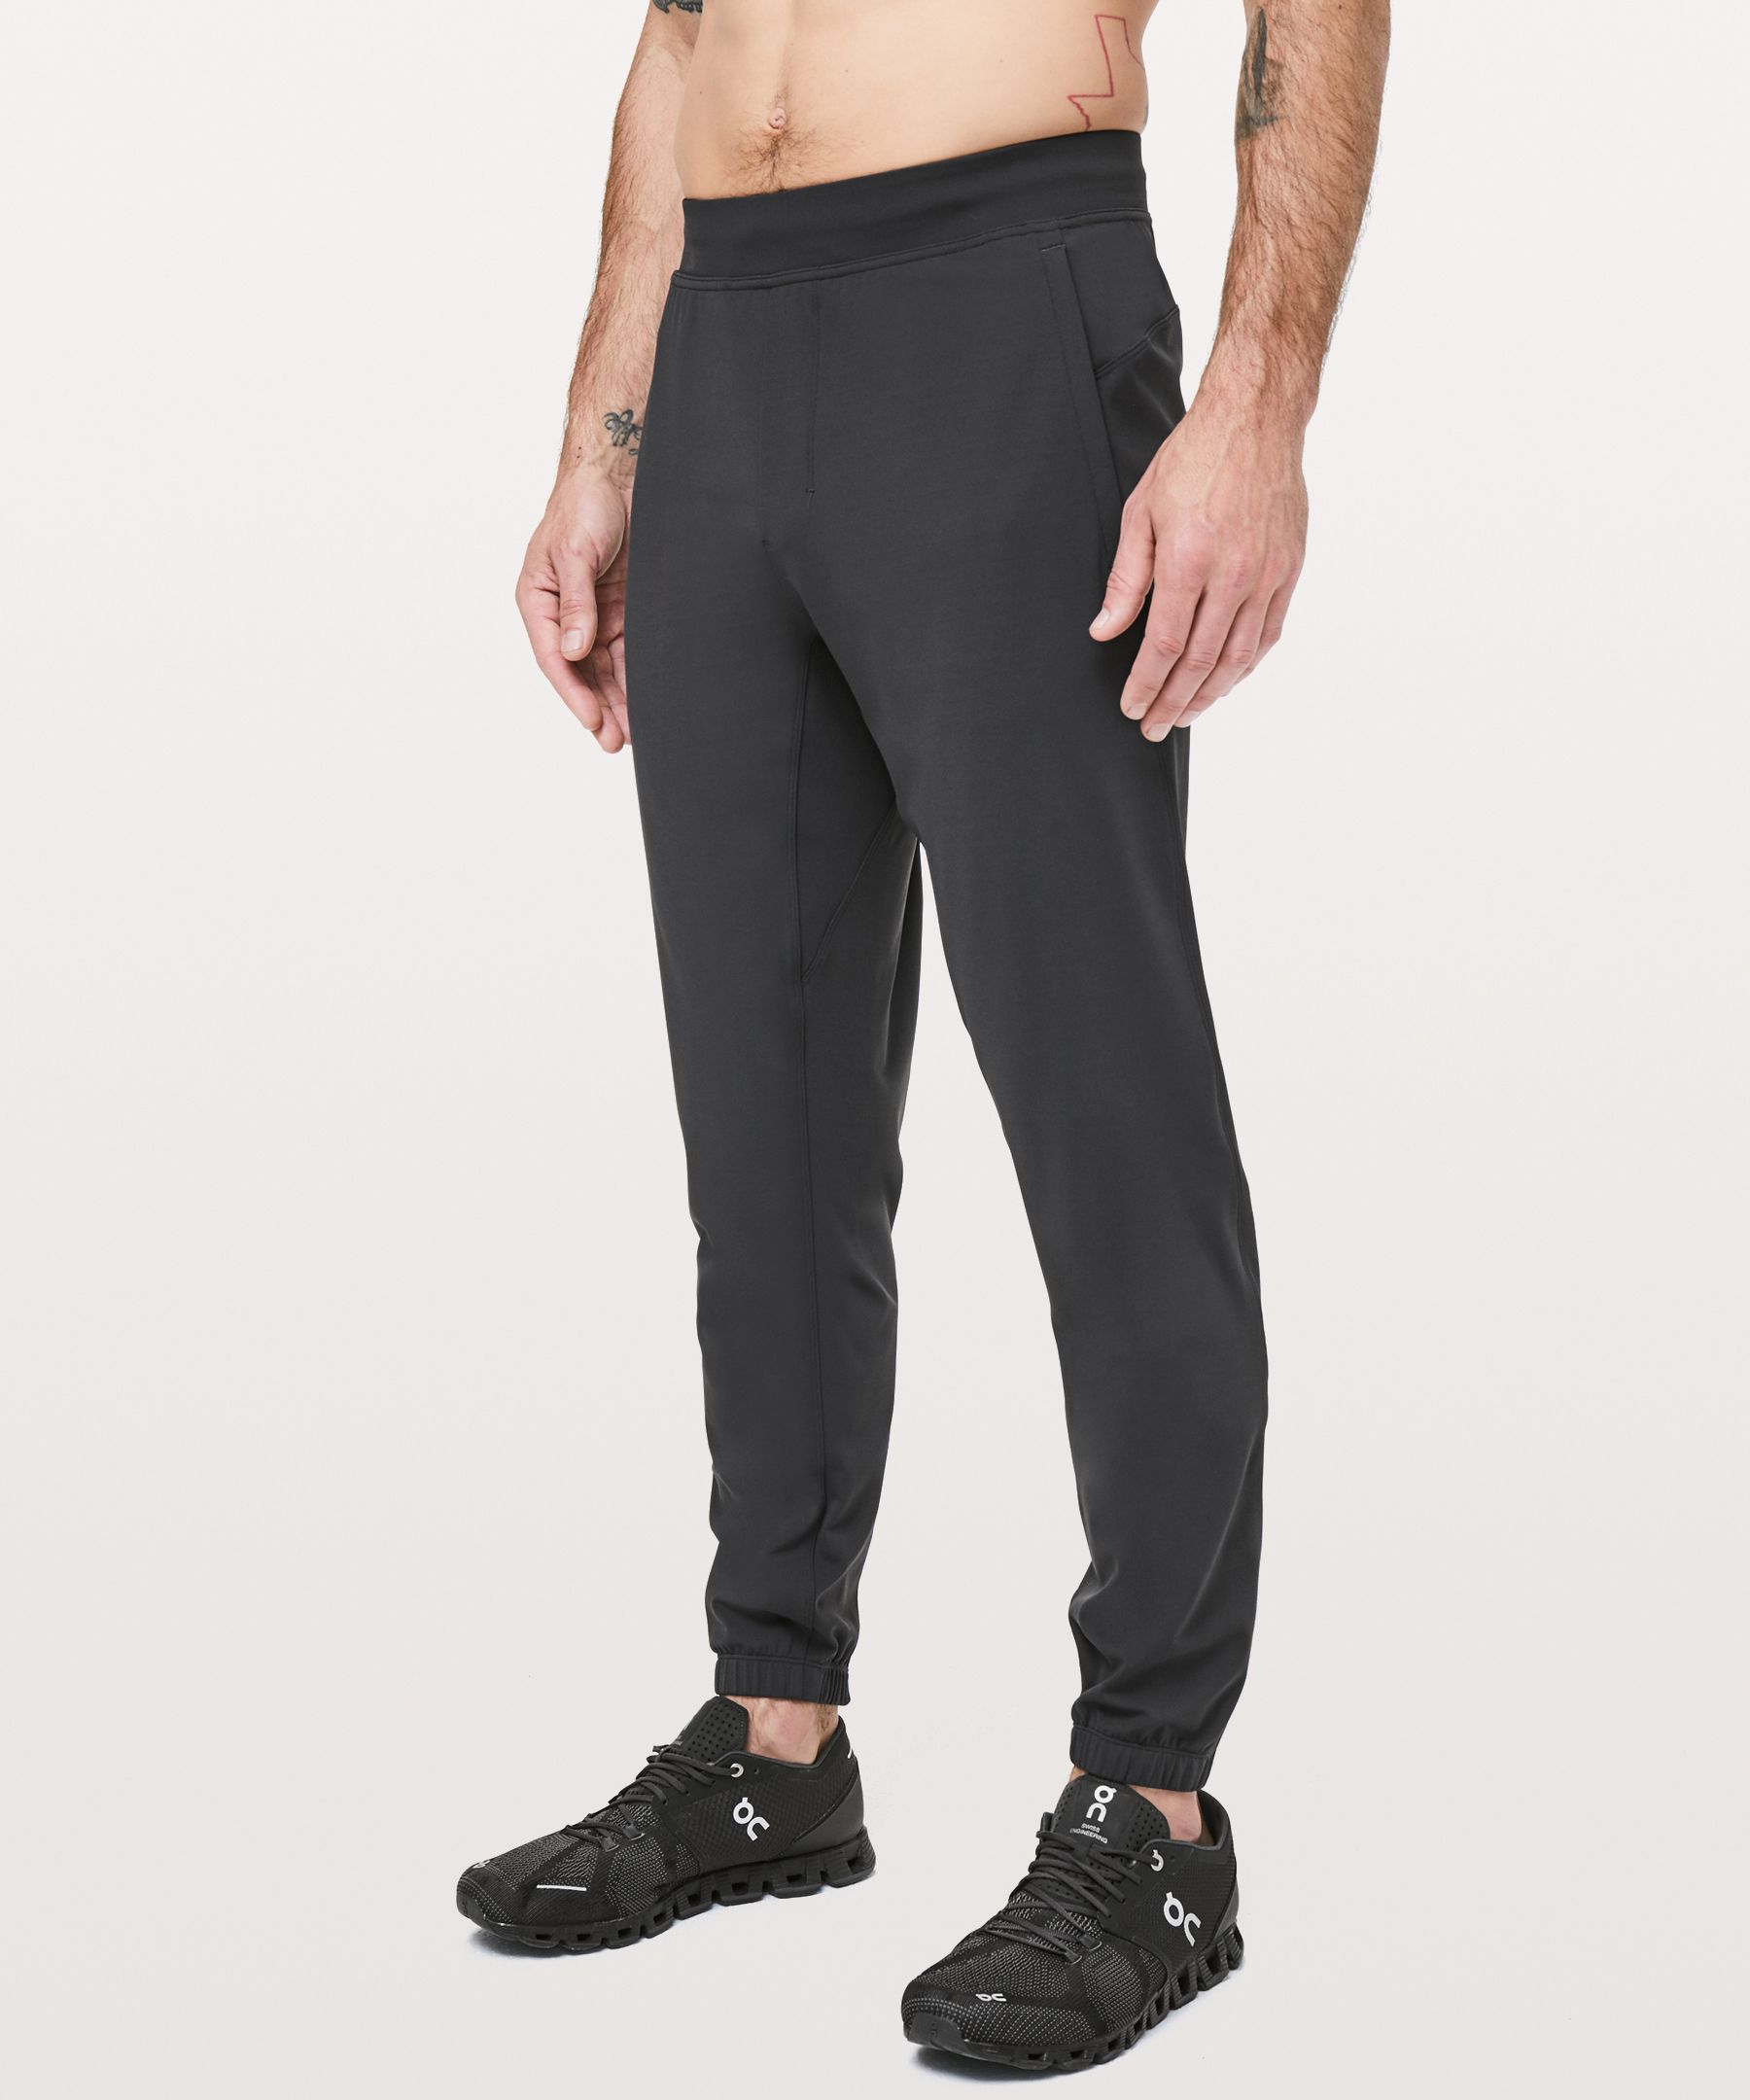 Lululemon surge joggers - Pants